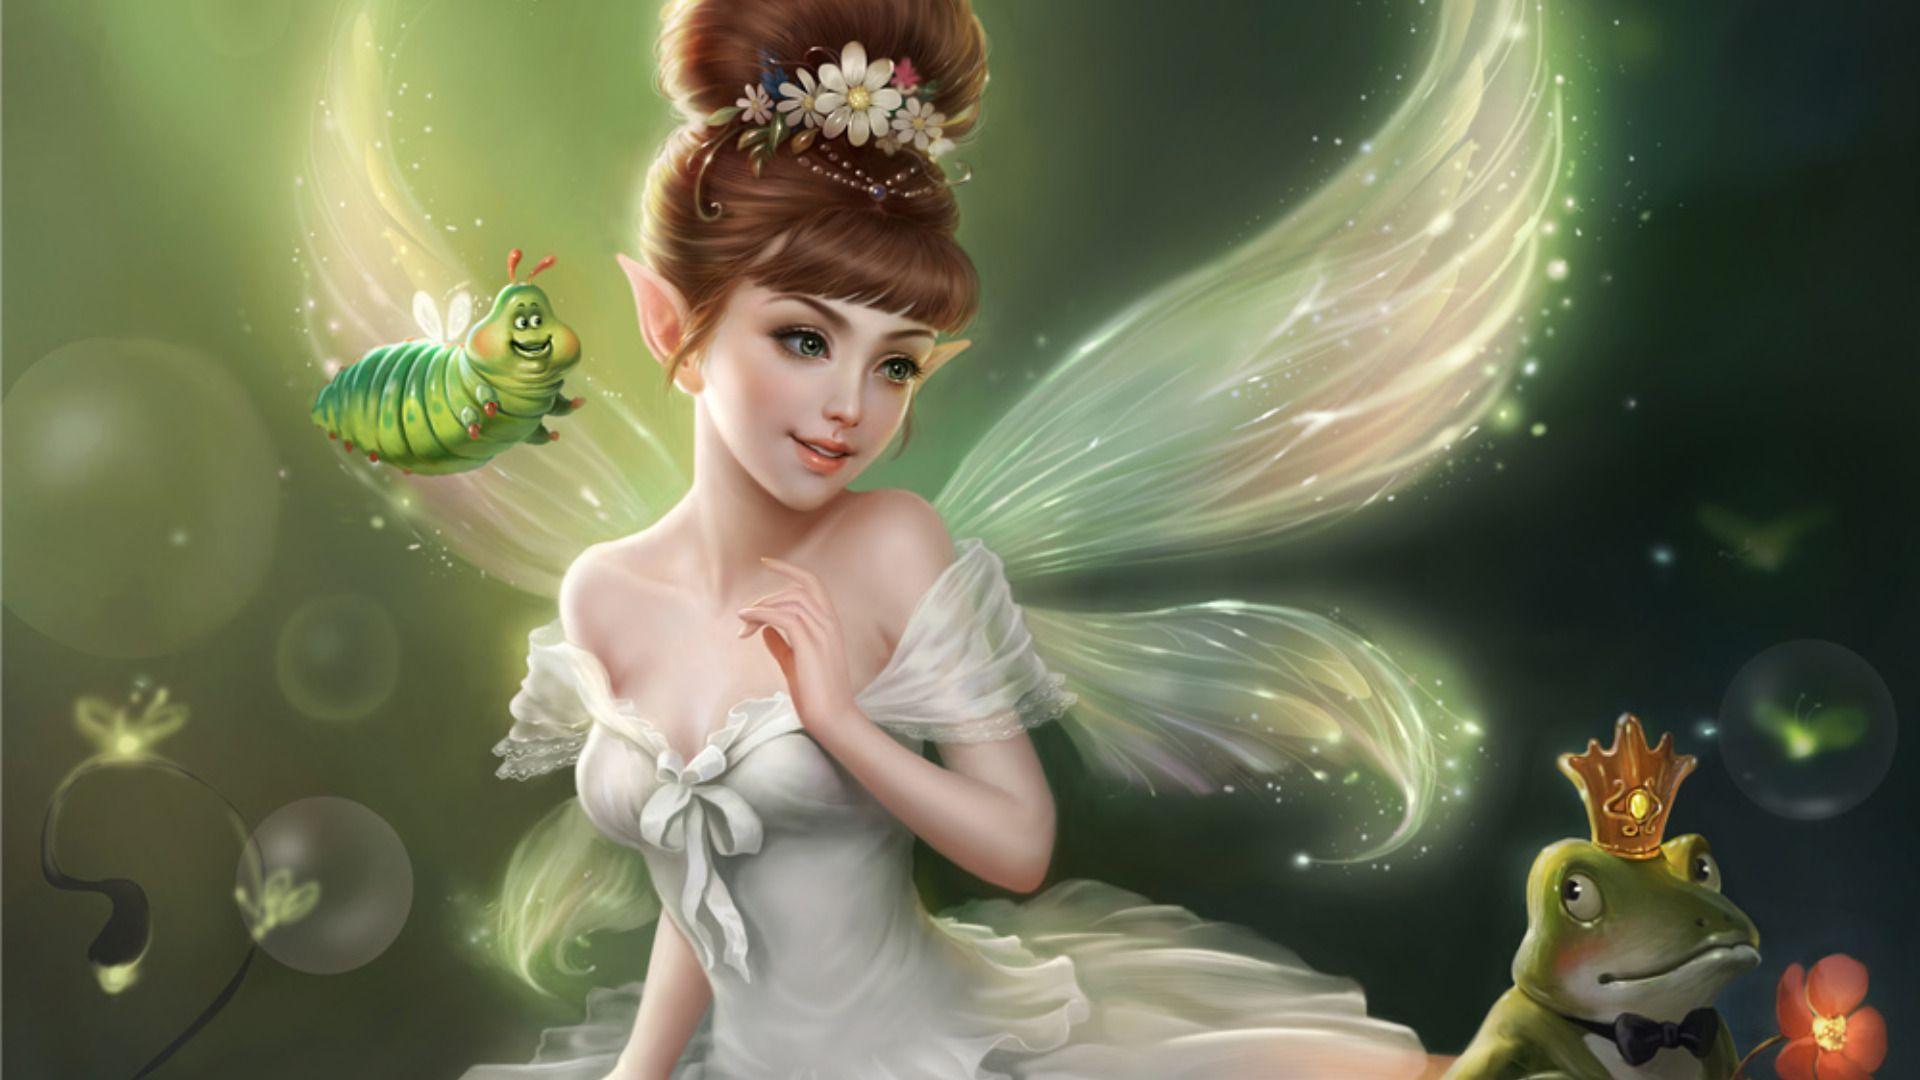 Beautiful Fairy Wallpaper For Desktop Wallpaper. walldesktophd